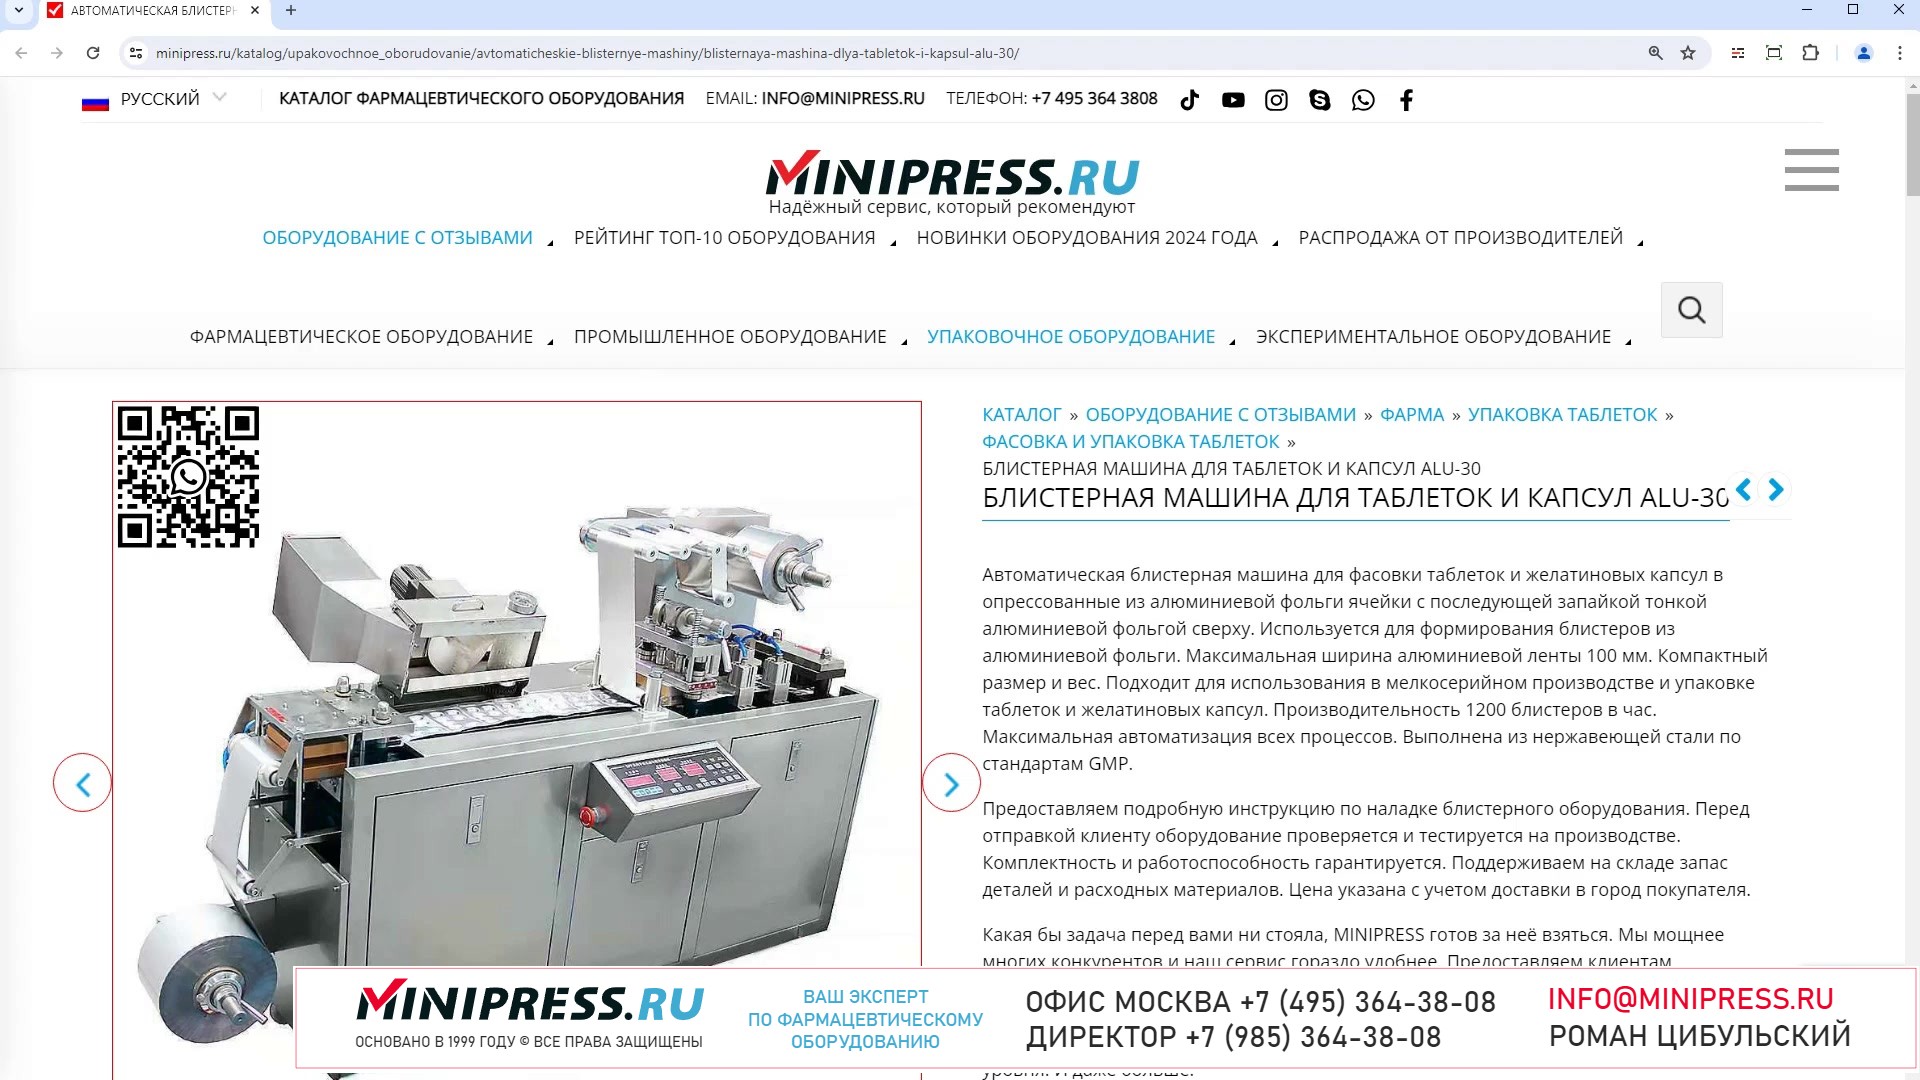 Minipress.ru Блистерная машина для таблеток и капсул ALU-30